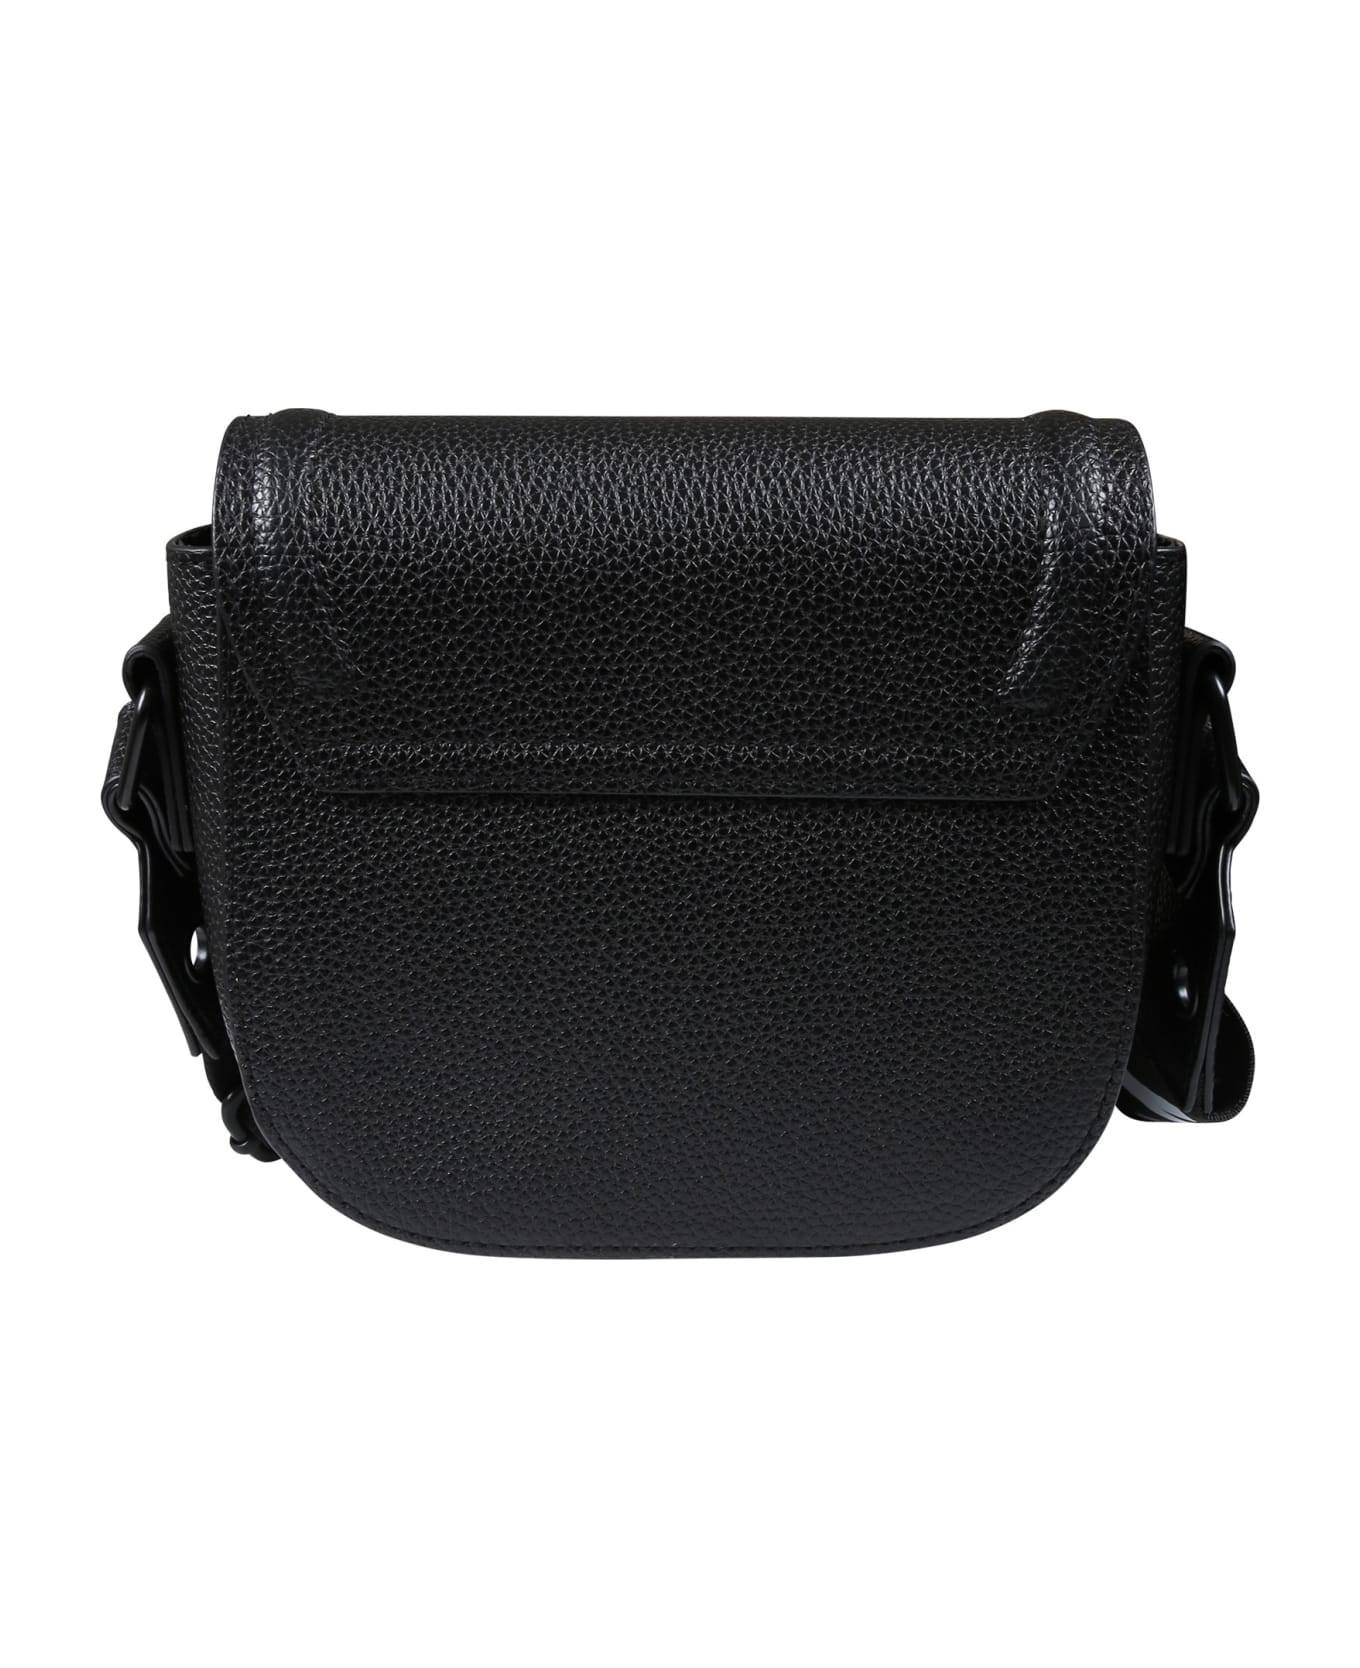 DKNY Black Bag For Girl With Logo - Black